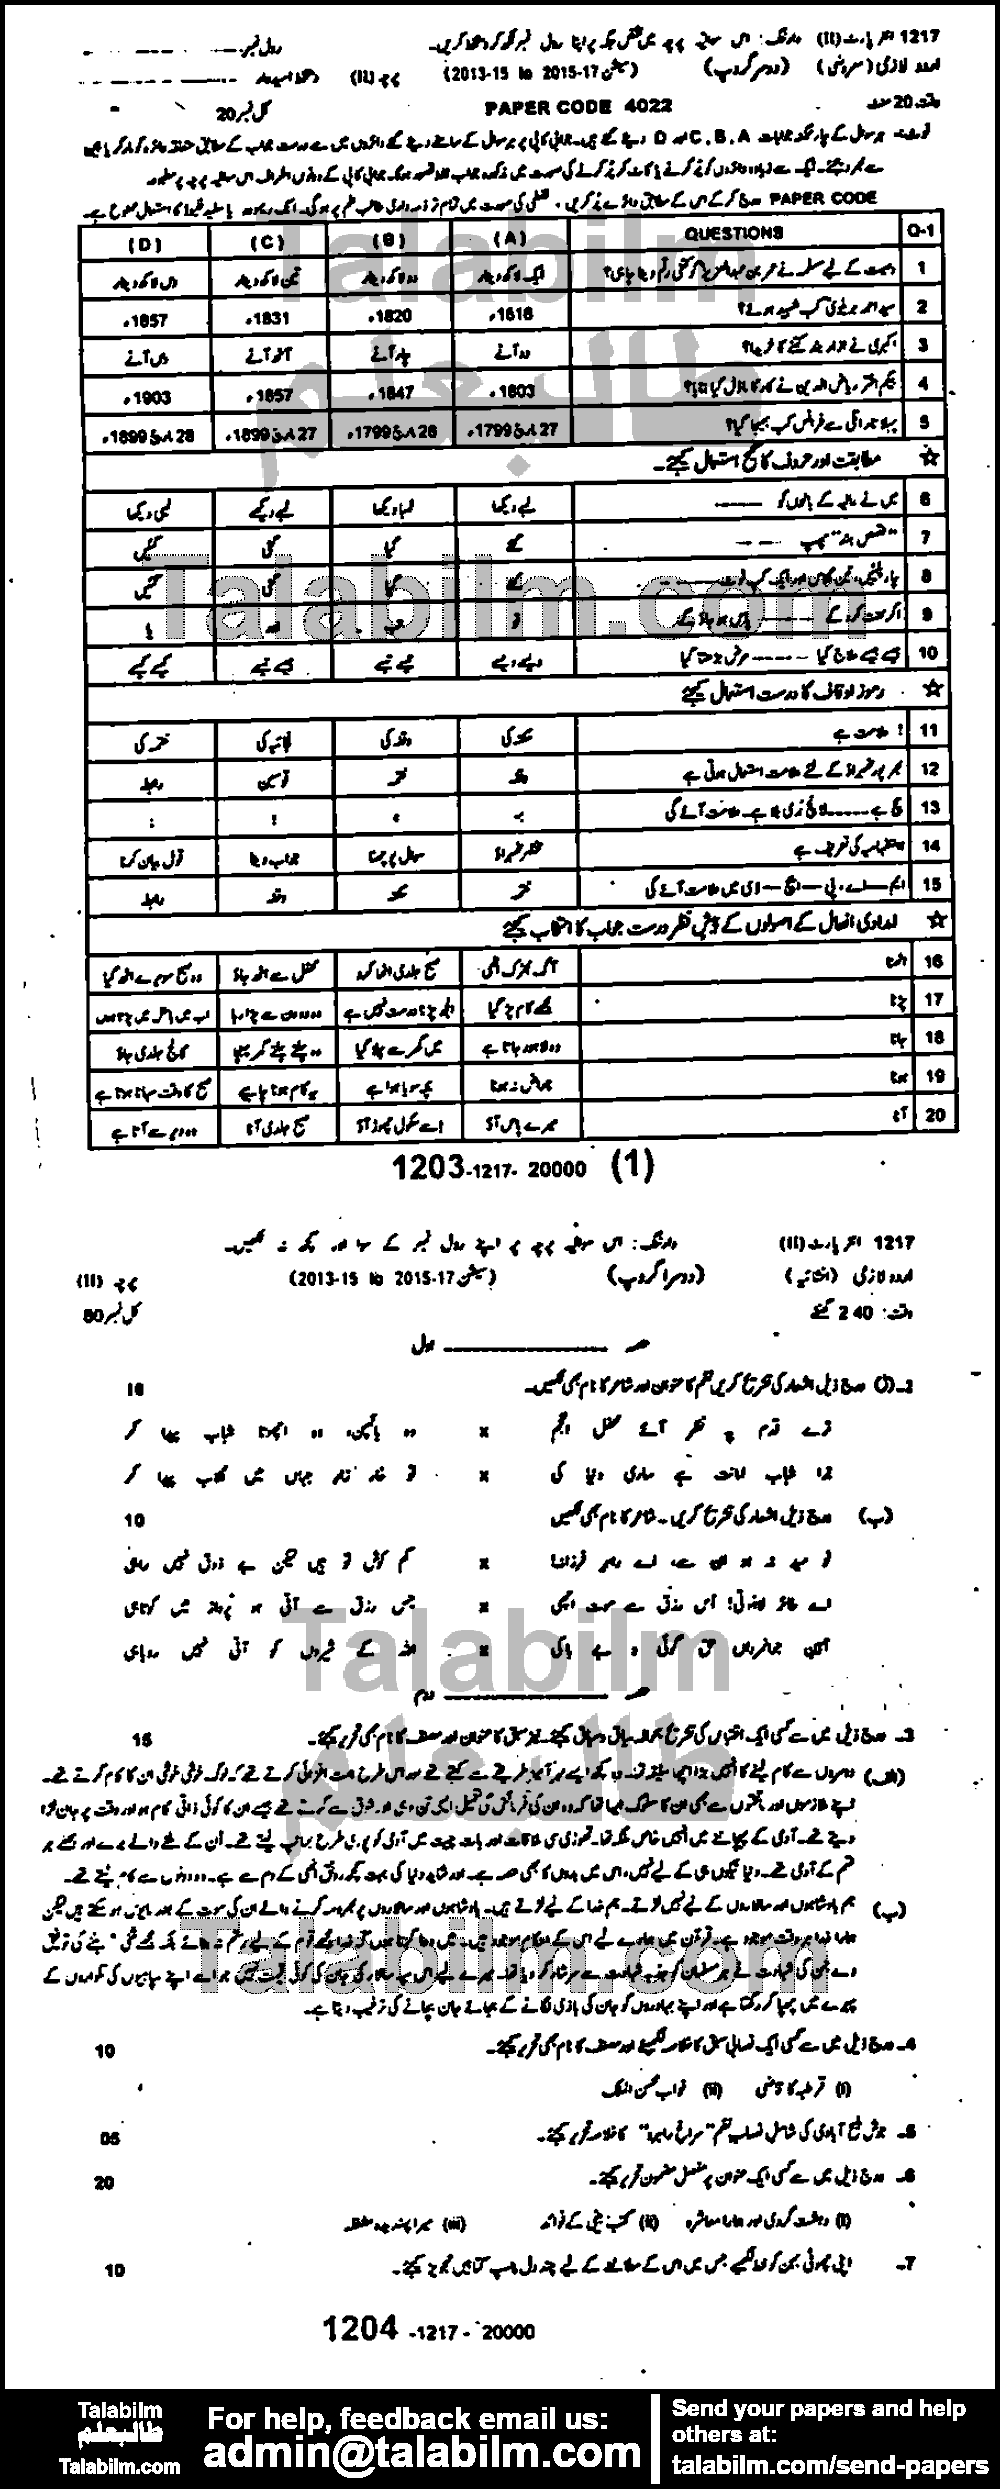 Urdu 0 past paper for Group-II 2017